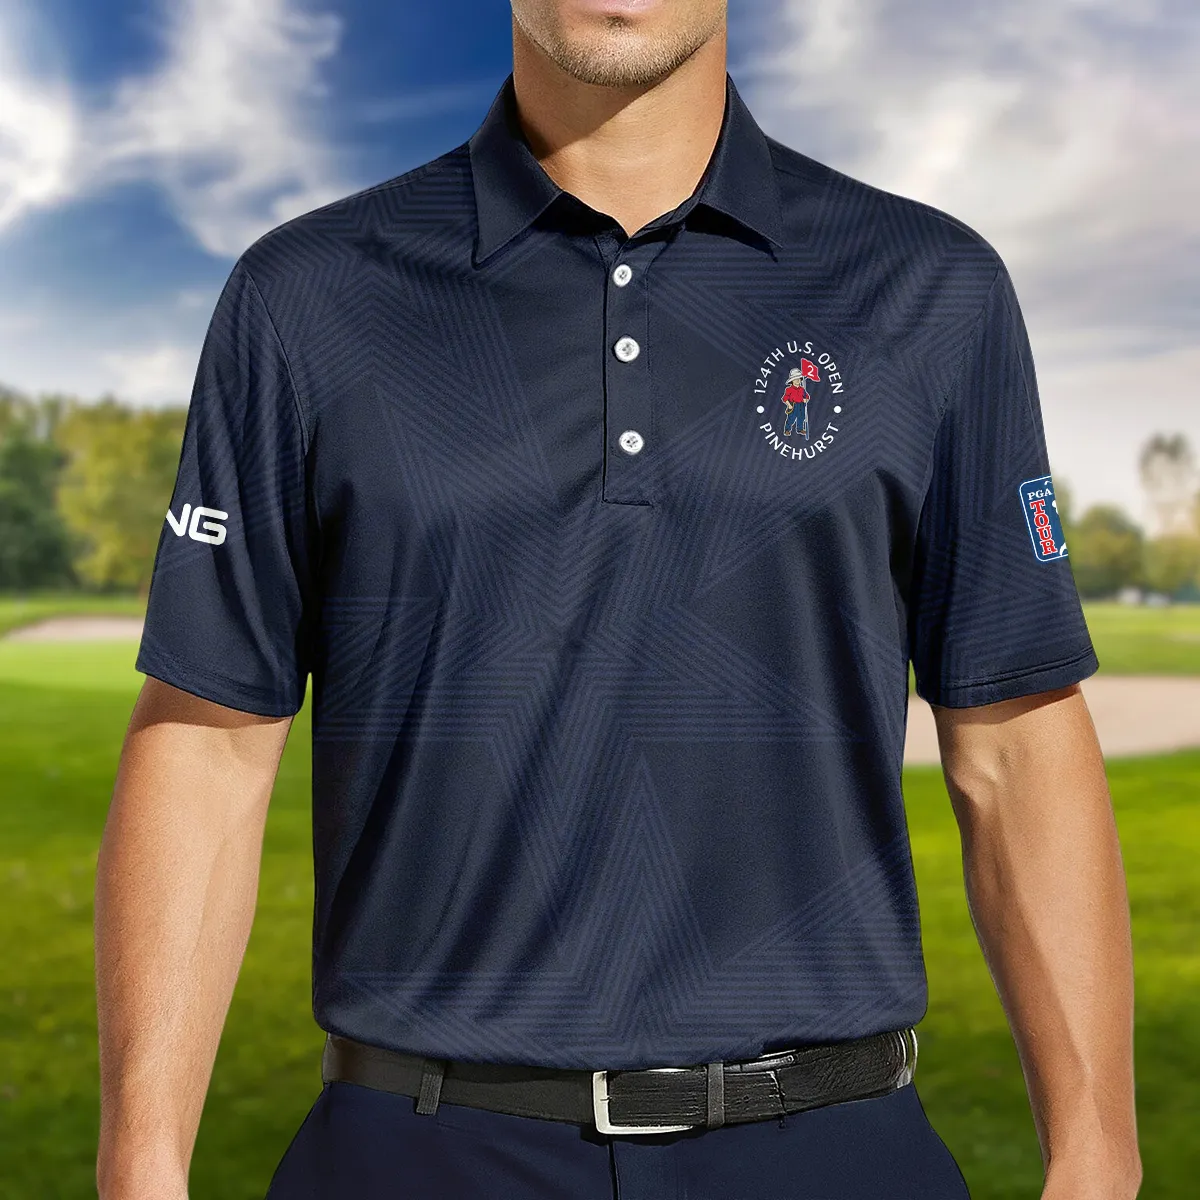 Golf Navy Color Star Pattern 124th U.S. Open Pinehurst Ping Polo Shirt Style Classic PLK1402